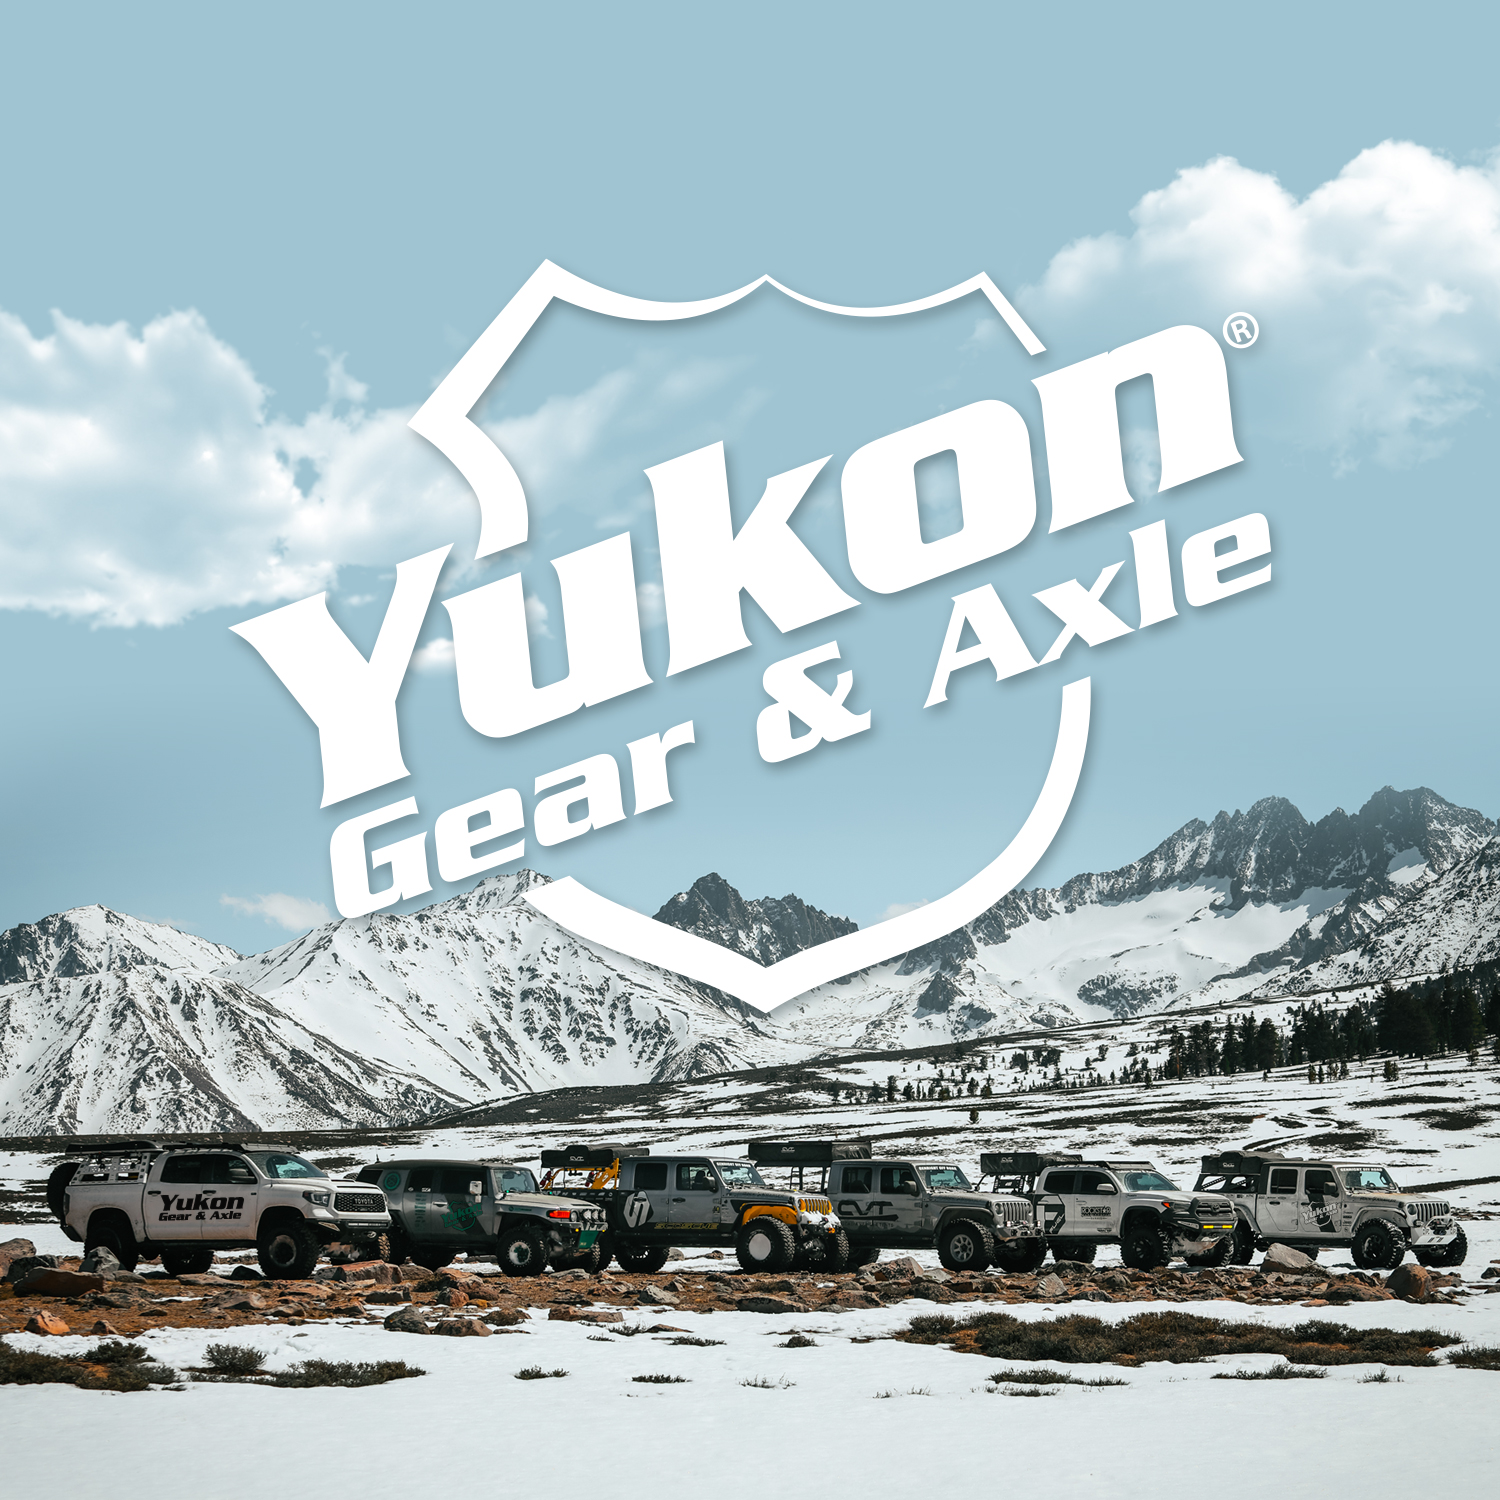 Yukon high performance replacement ring & pinion set, Dana M300, 3.55 ratio 